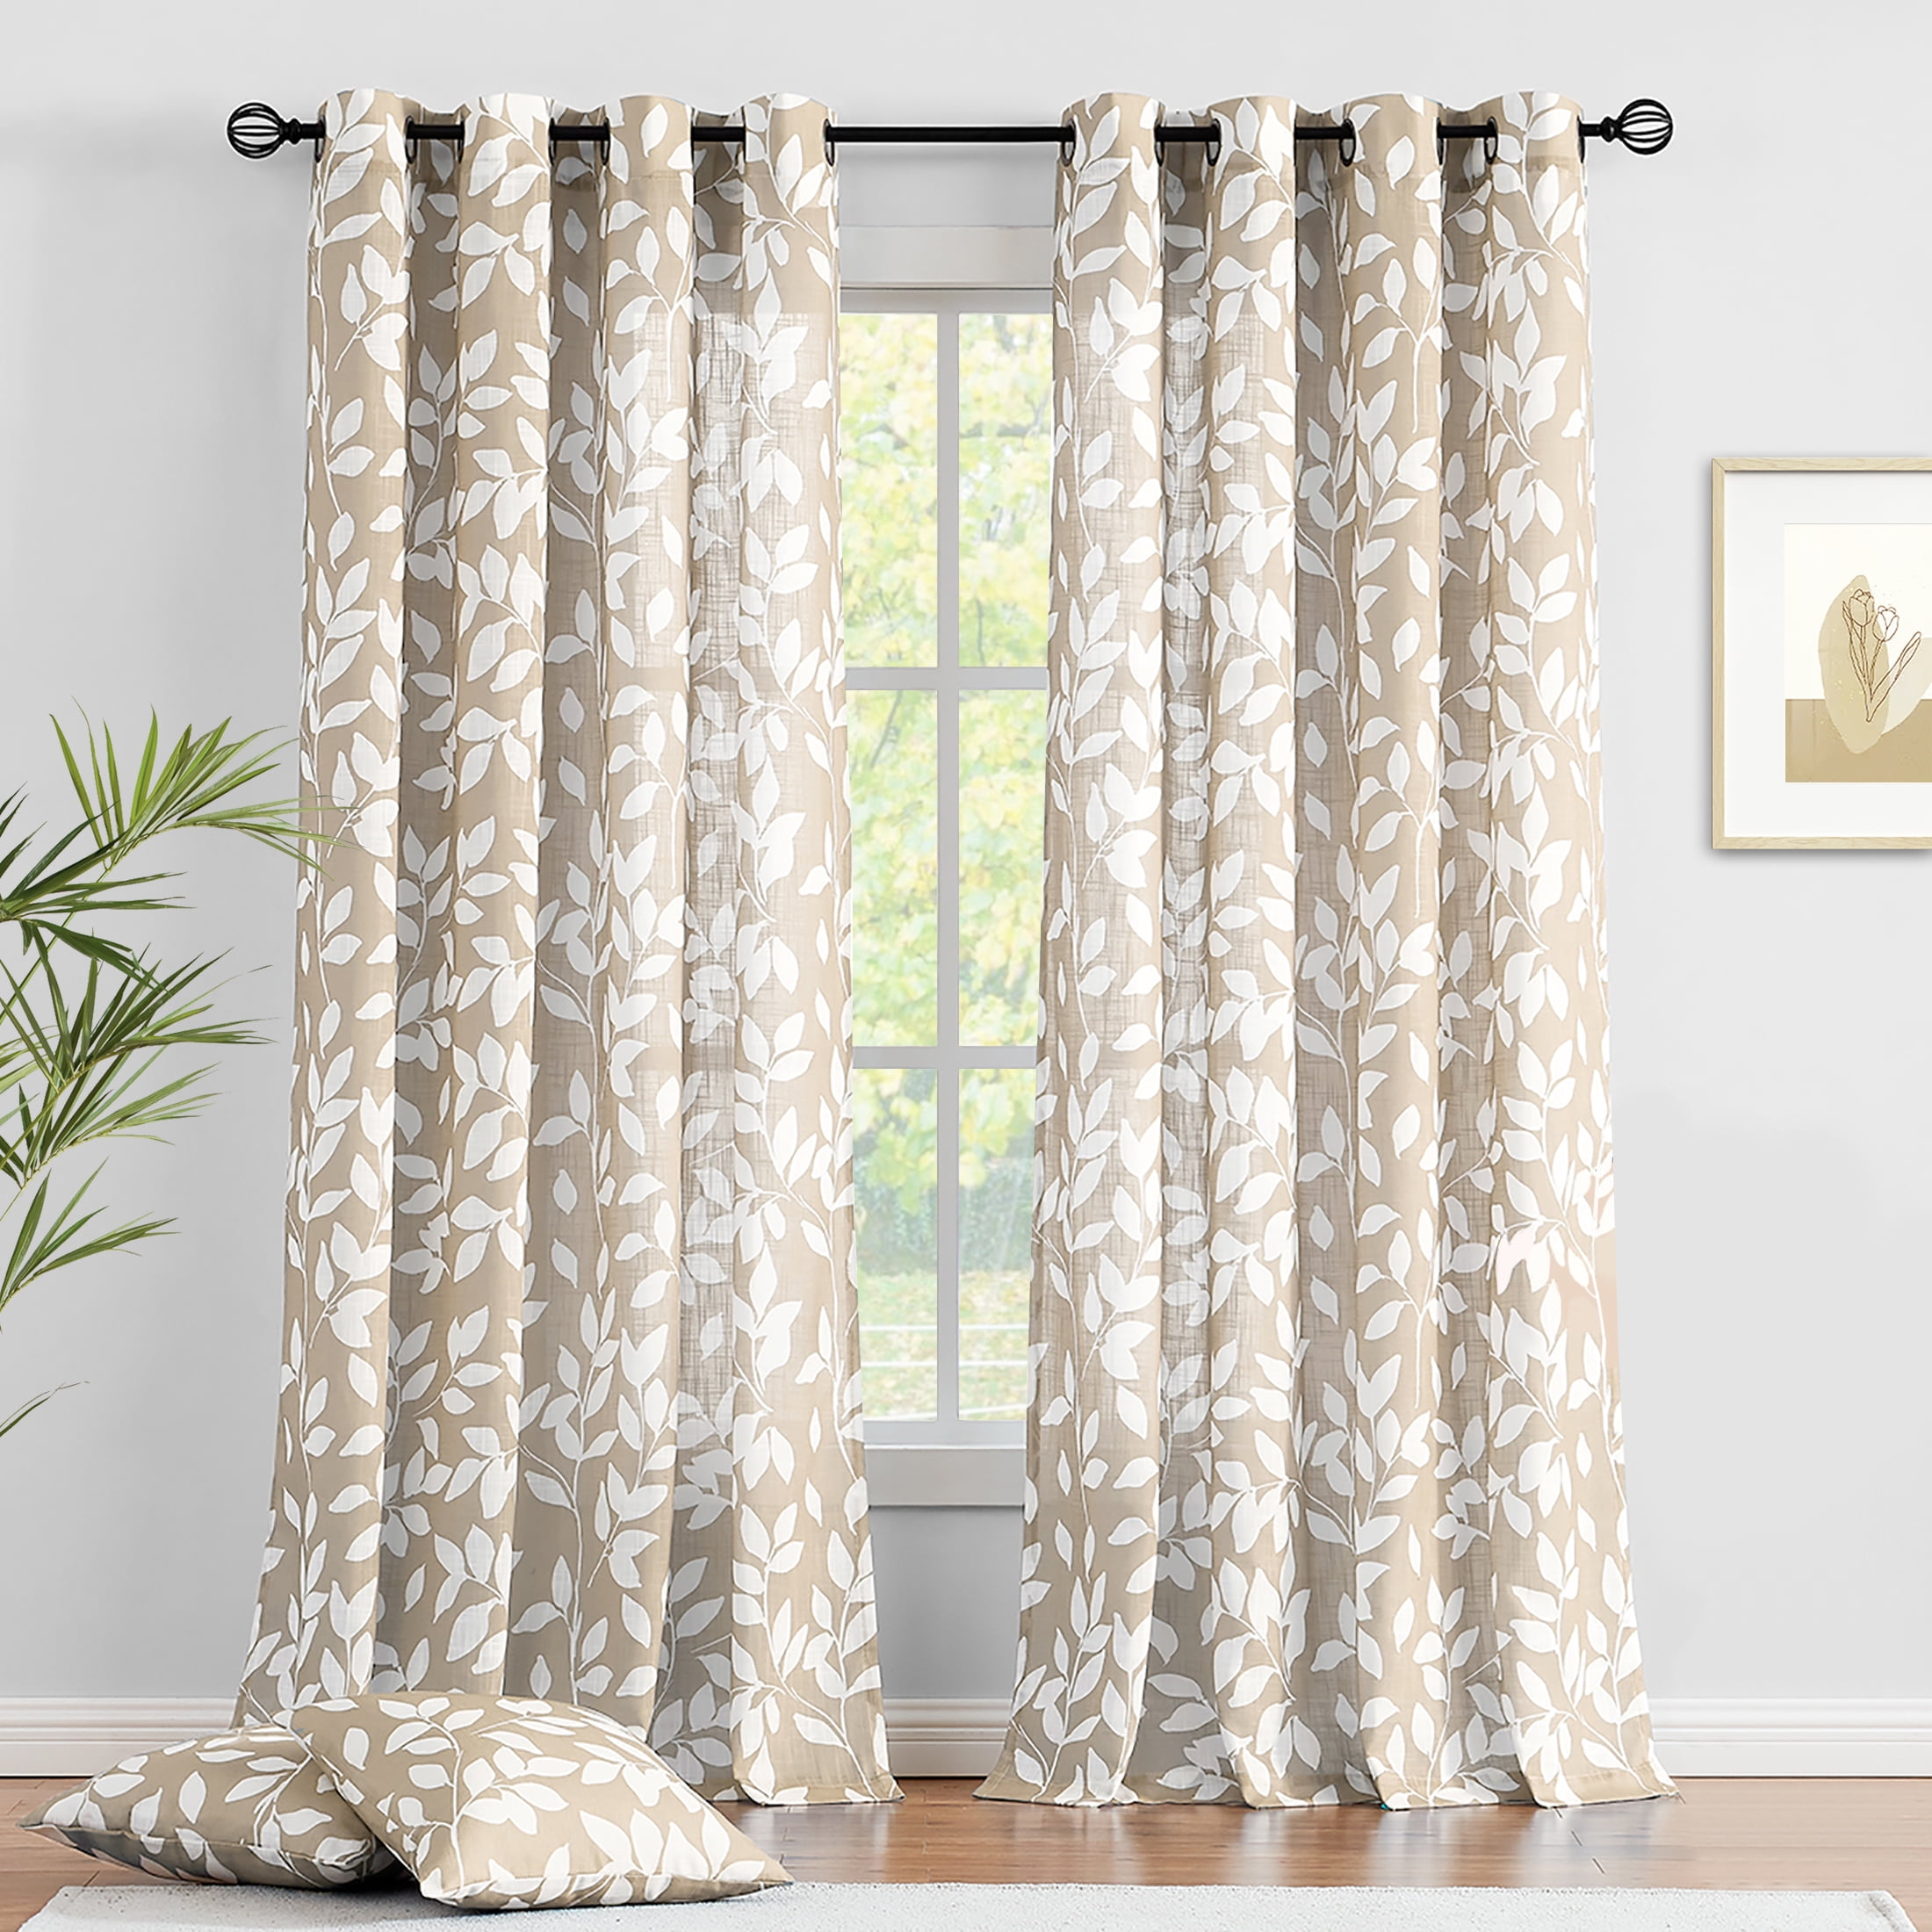 Exultantex Taupe Semi Sheer Curtains